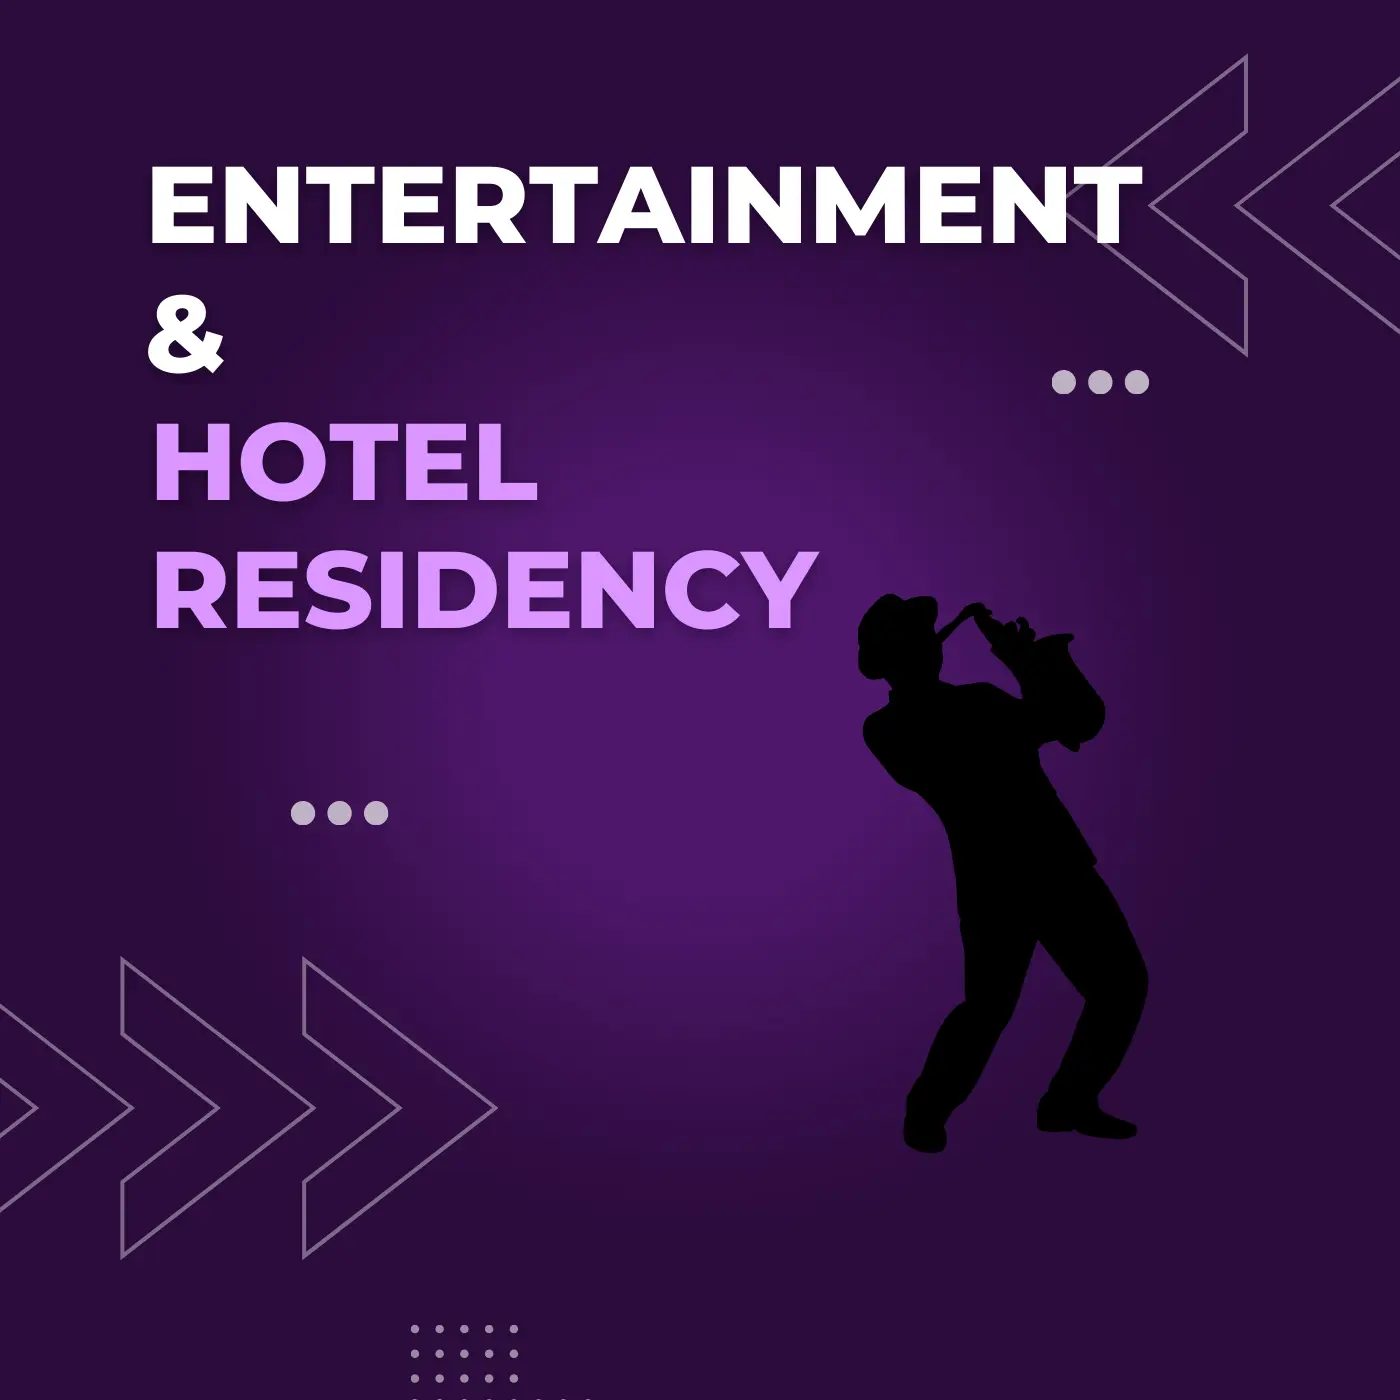 Entertainment & Hotel Residency, Event Management Goa